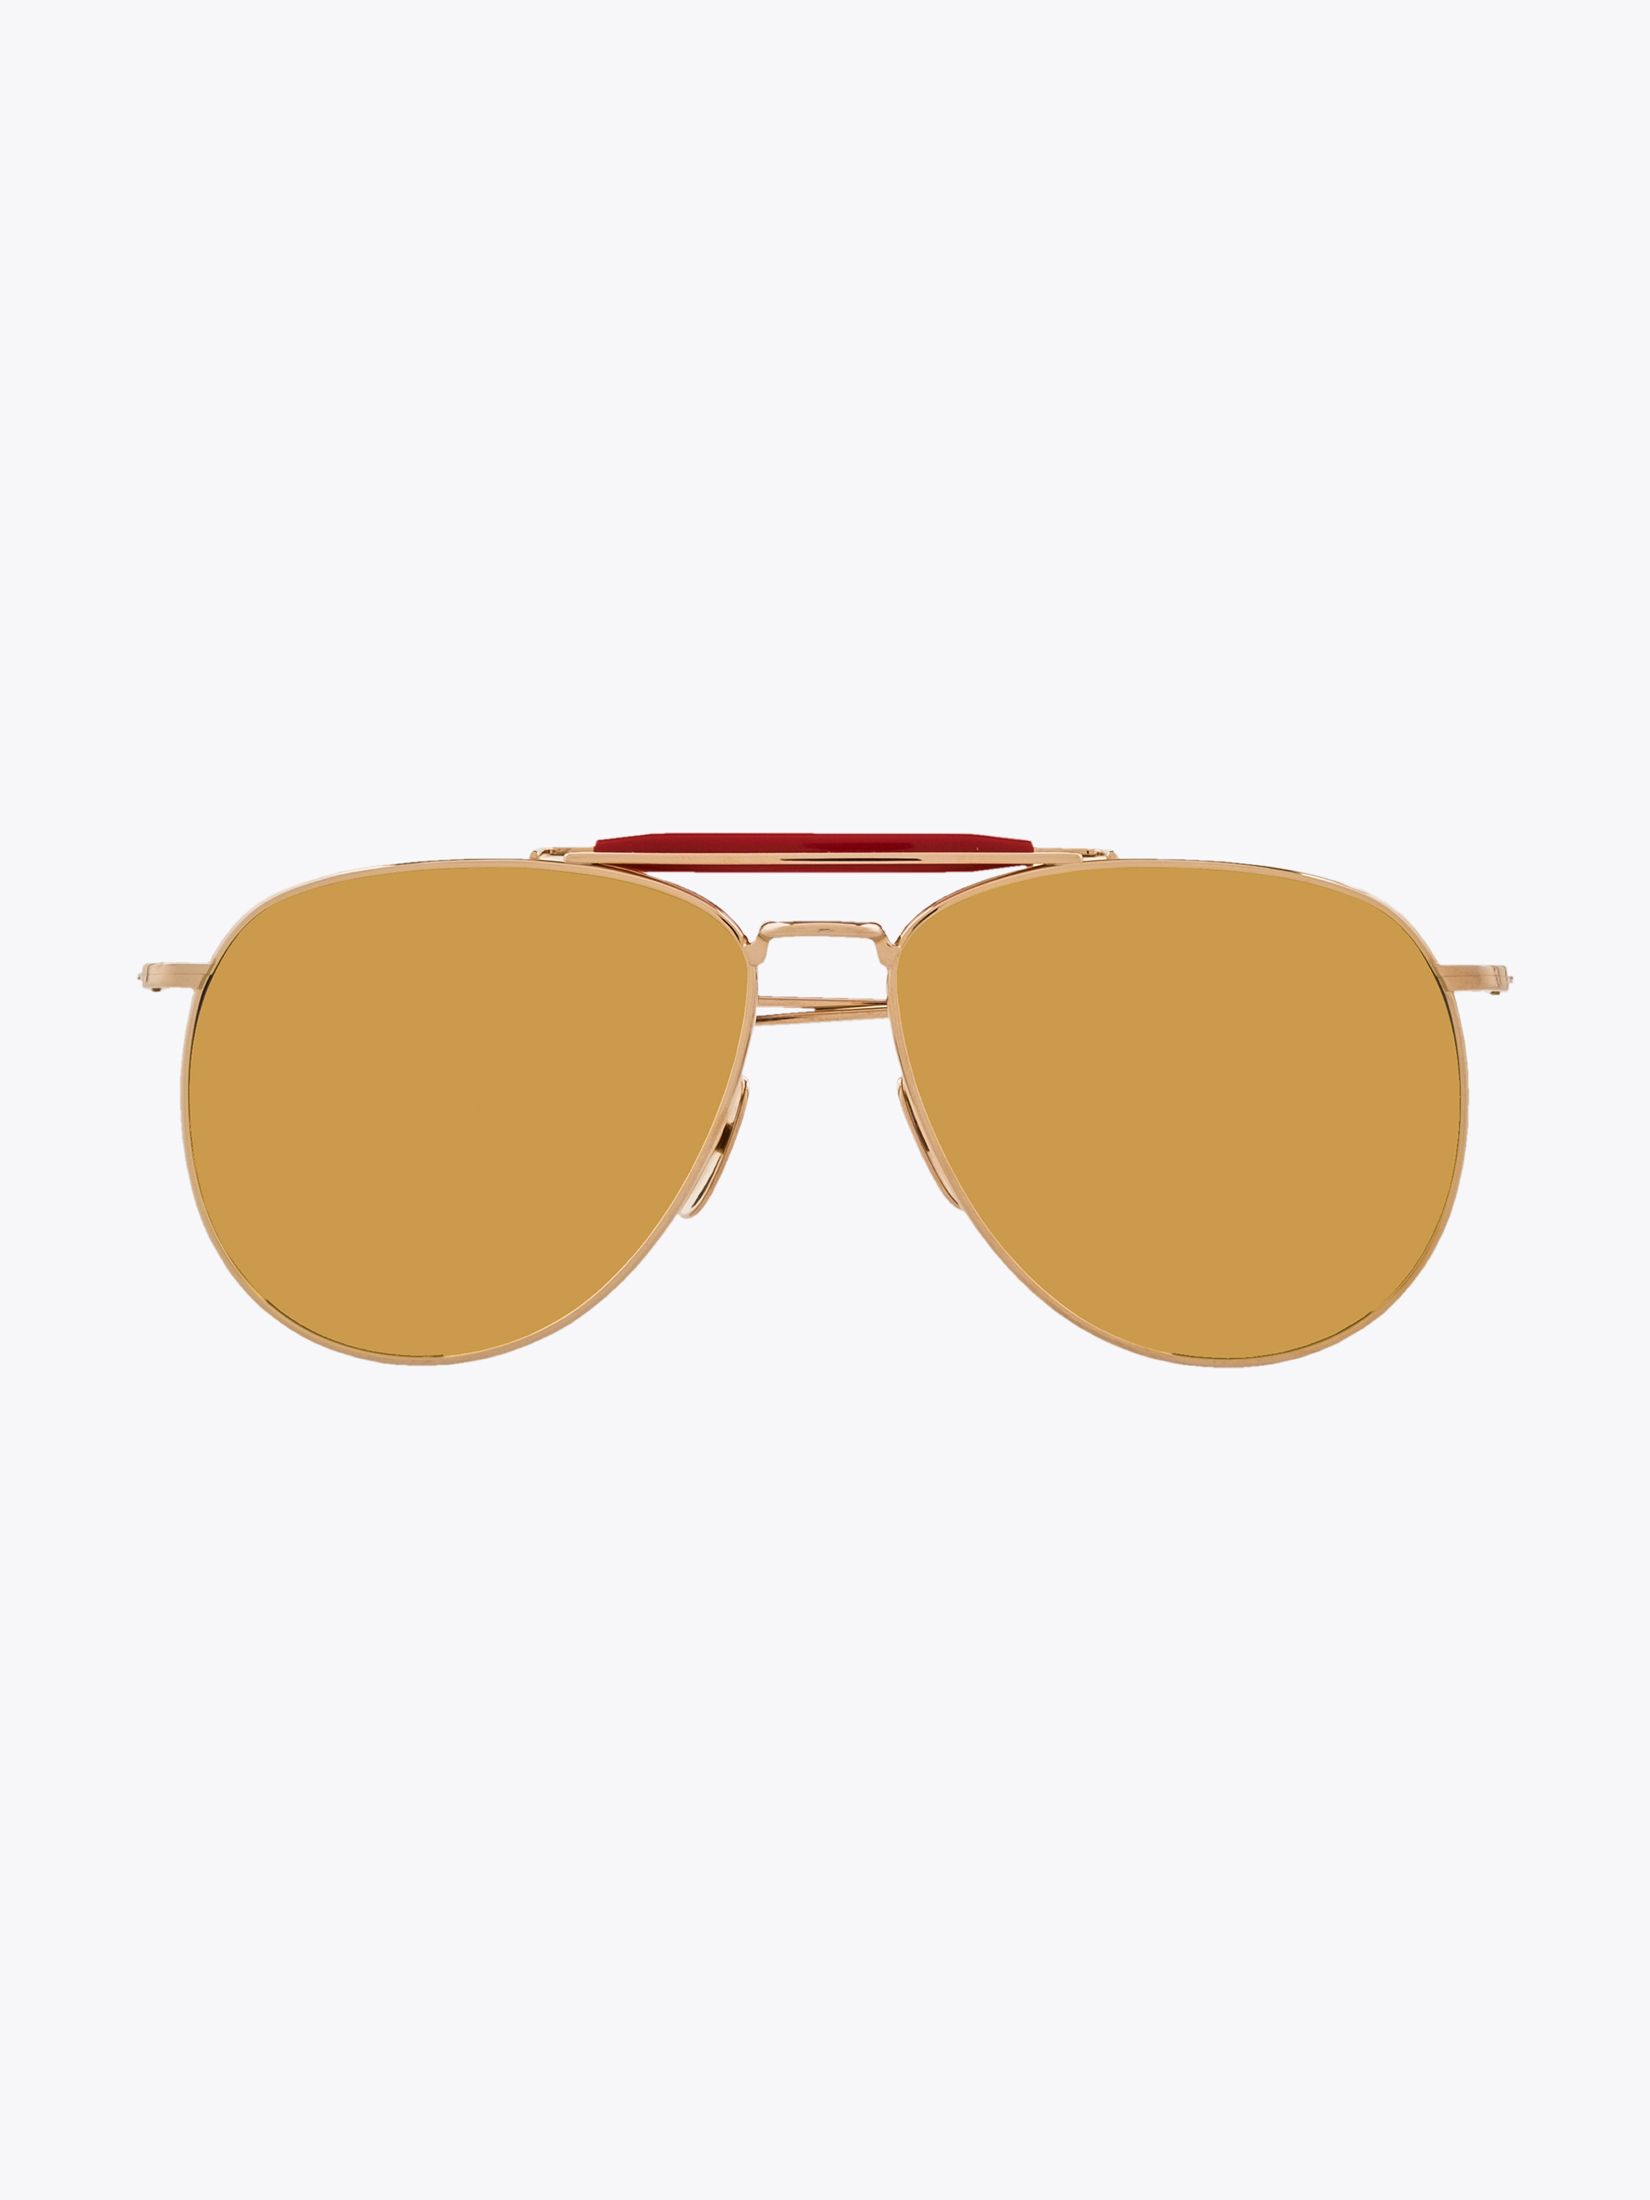 Gold THOM BROWNE TB-015 Sunglasses